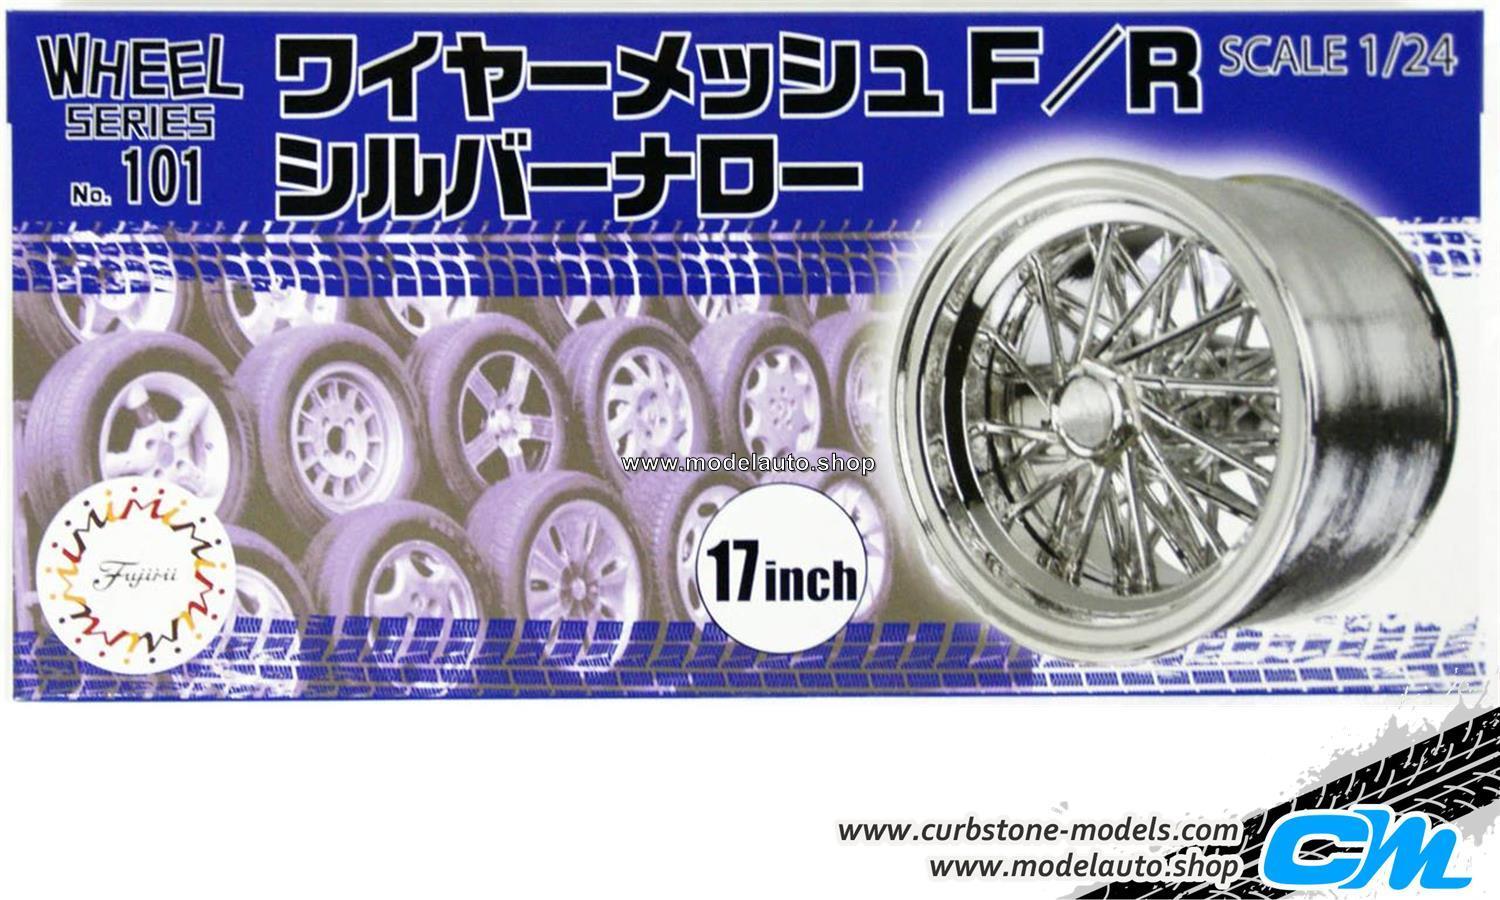 Fujimi TW53 Wire Wheel Silver Type & Tire Set 17 inch 1/24 Scale Kit New Japan 